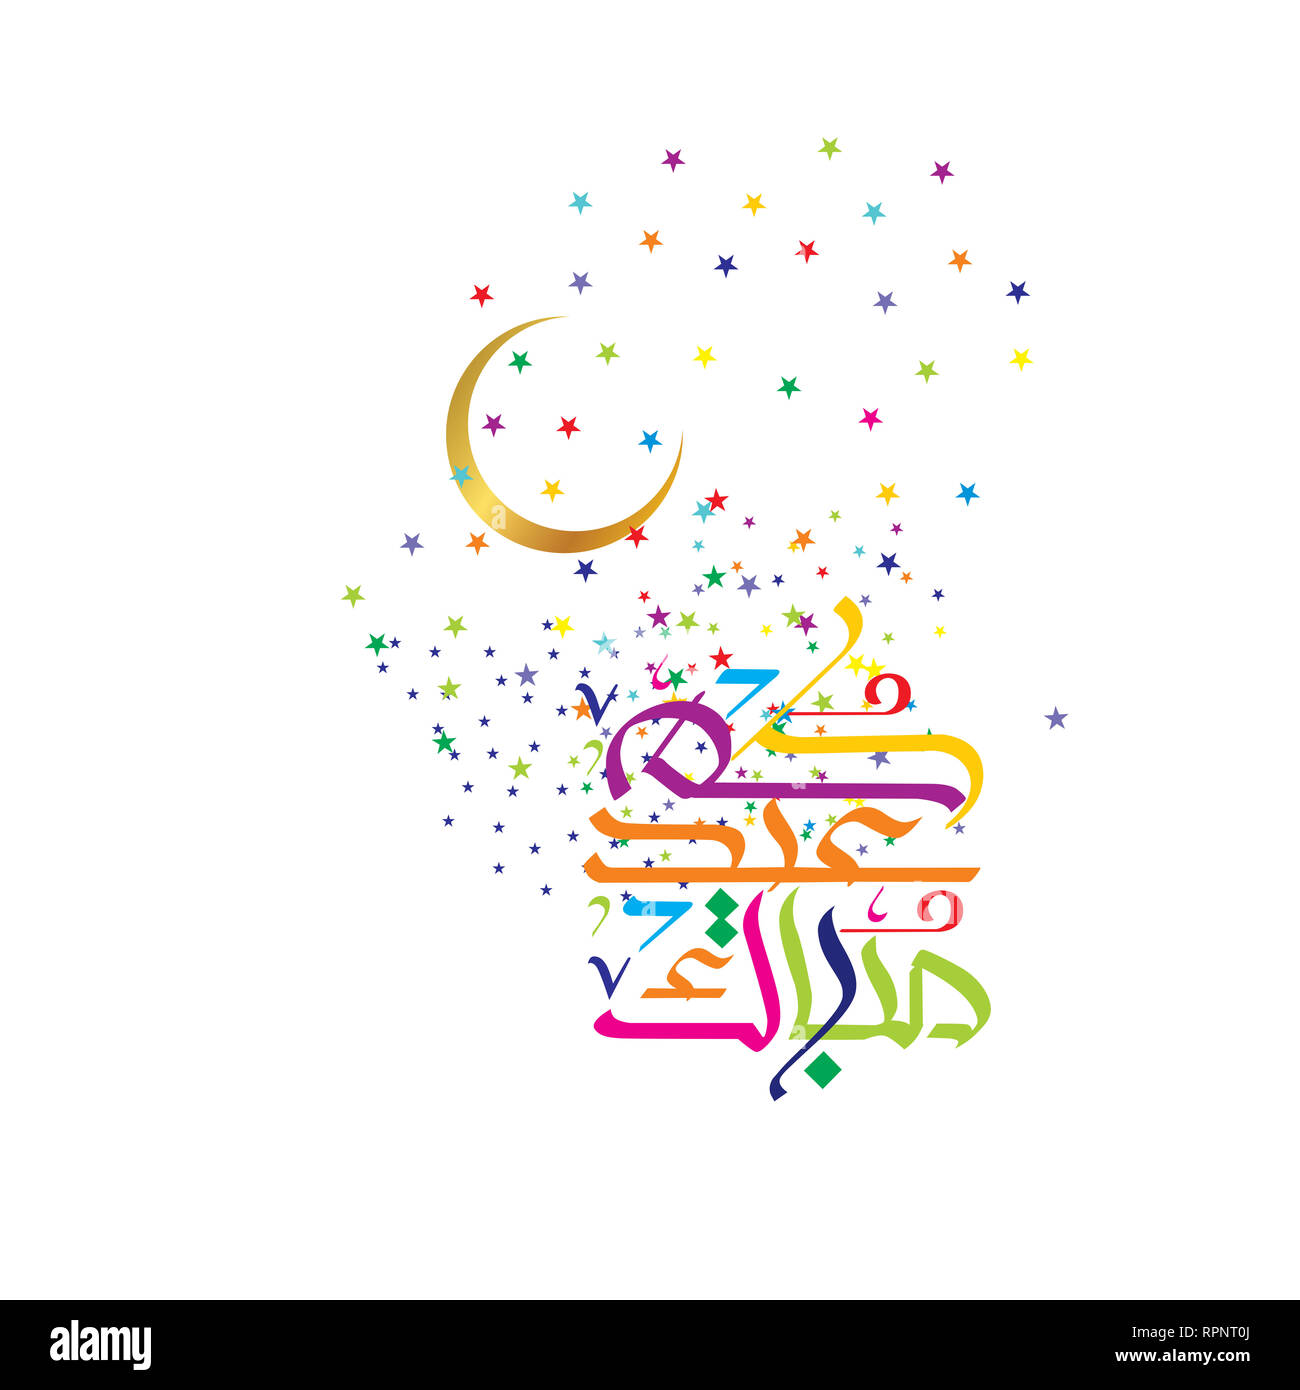 Eid Mubarak with Arabic calligraphy for the celebration of Muslim community festival Stock Photo